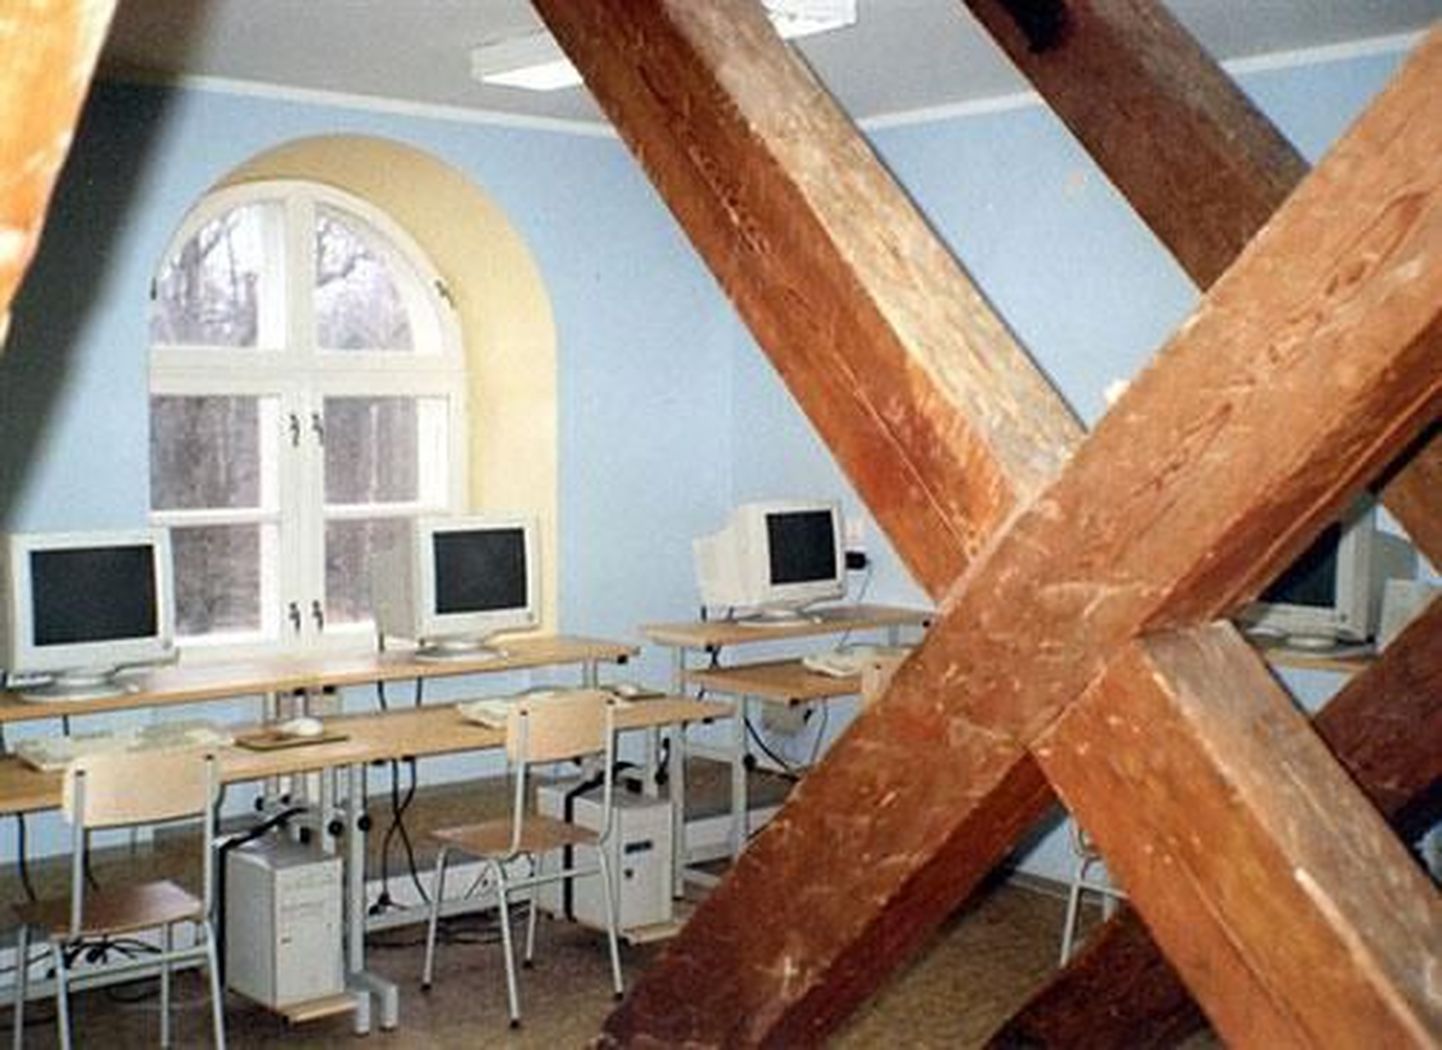 Tihemetsa kooli arvutiklass.